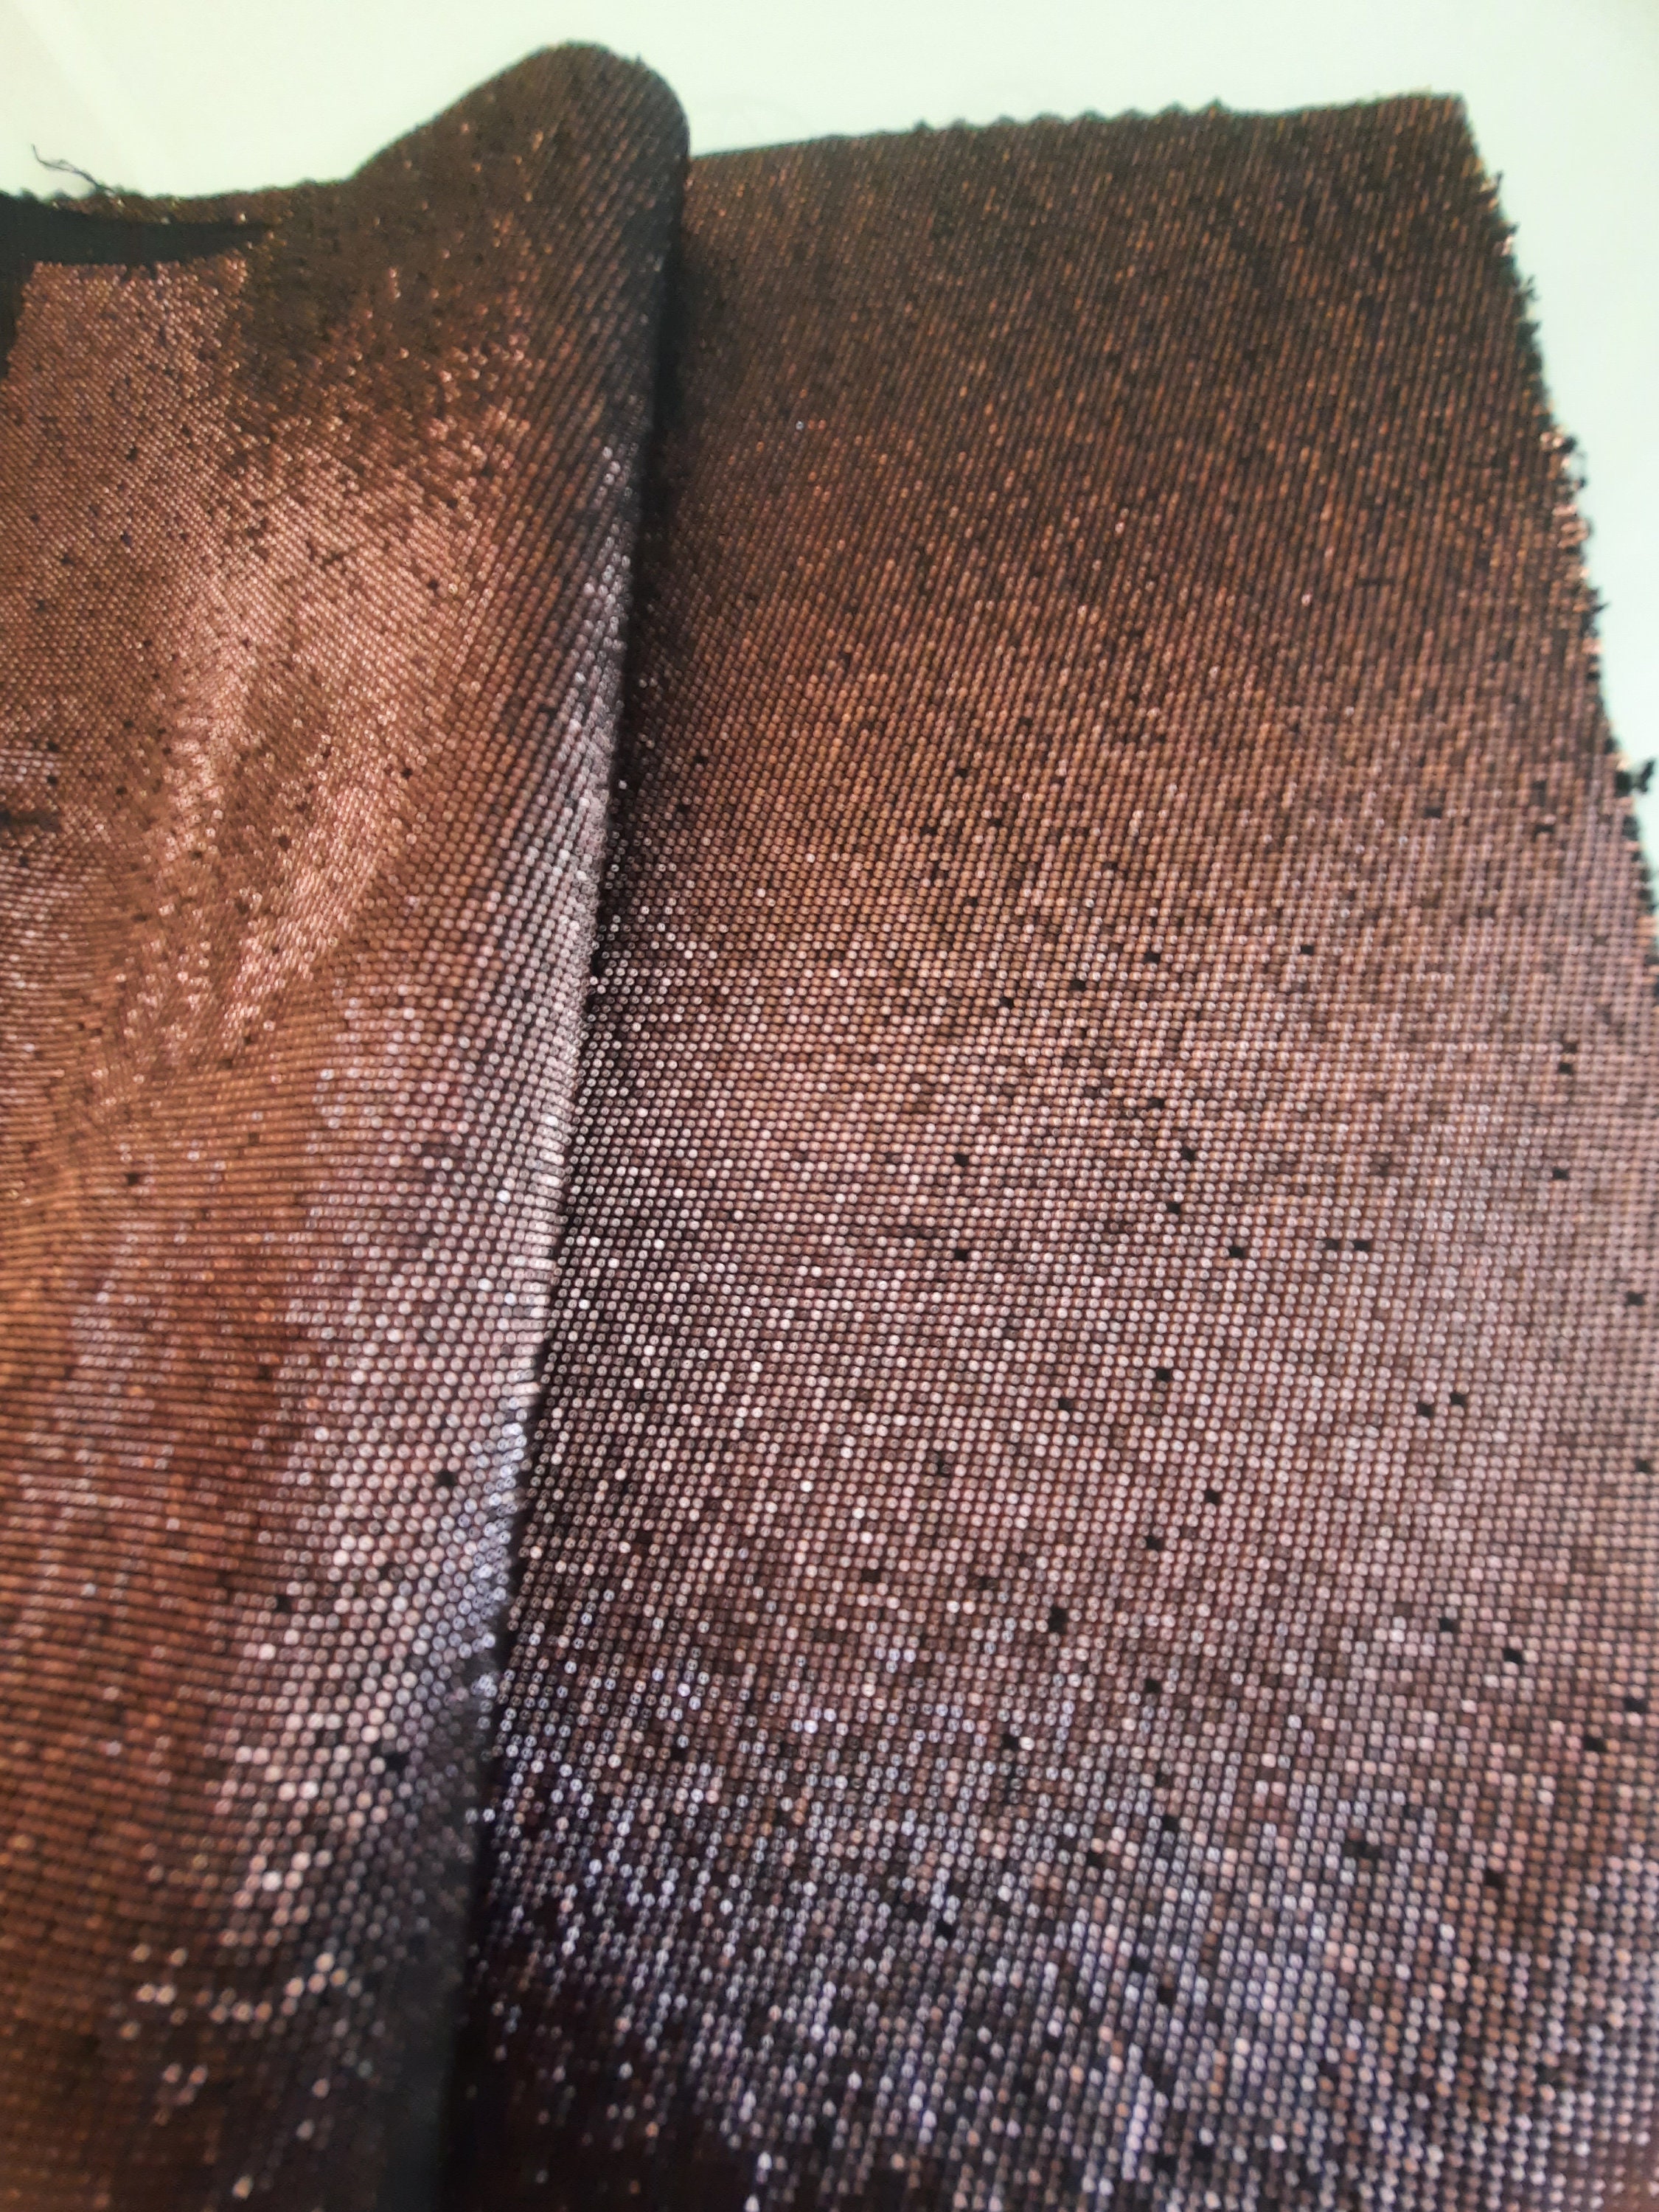 Copper Satin Lycra Fabric,shiny Copper Dress Fabric.apparel Sewing